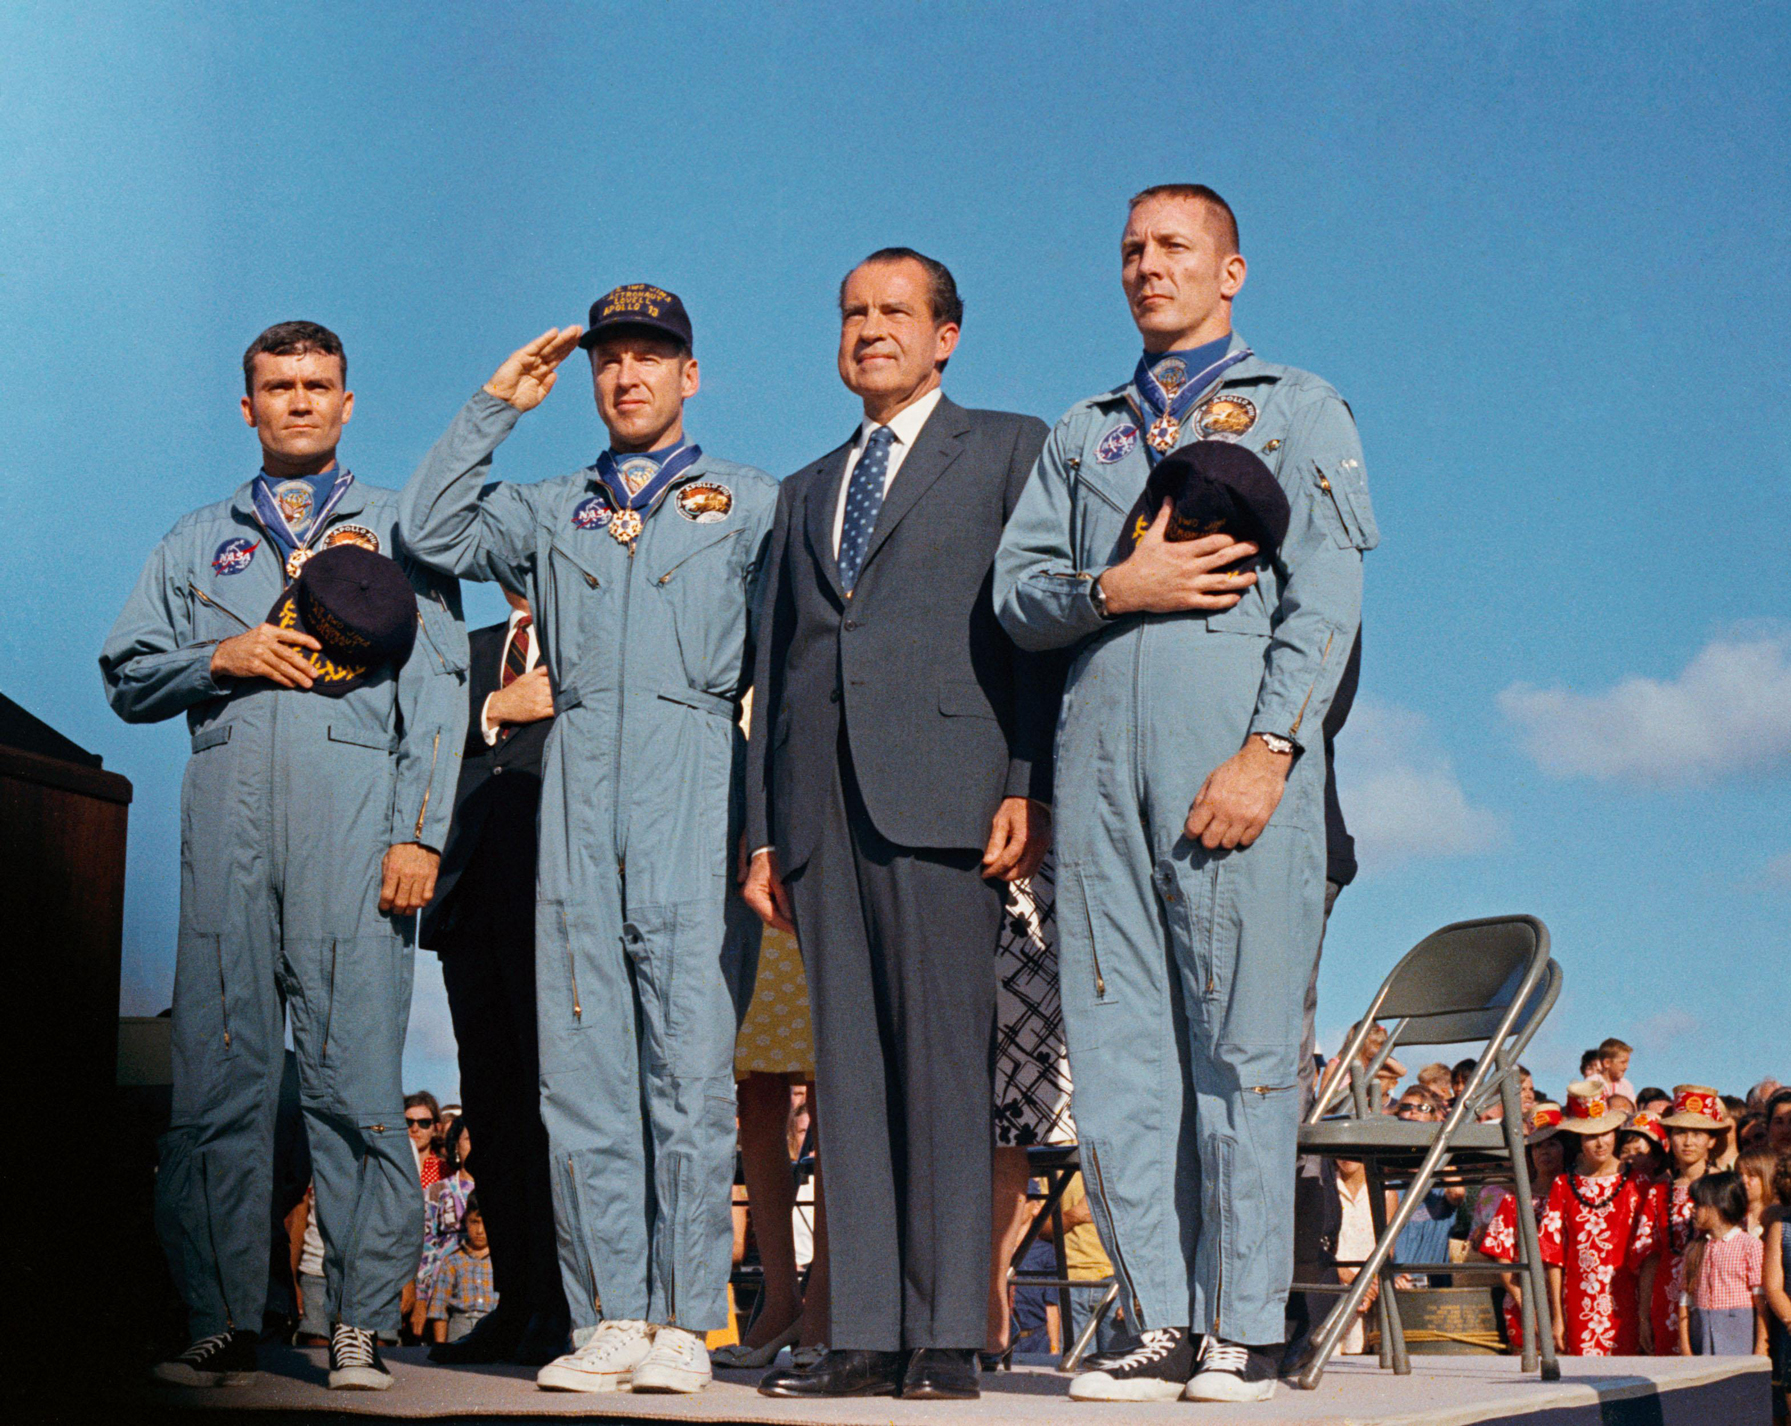 US President Nixon and Apollo 13 astronauts.